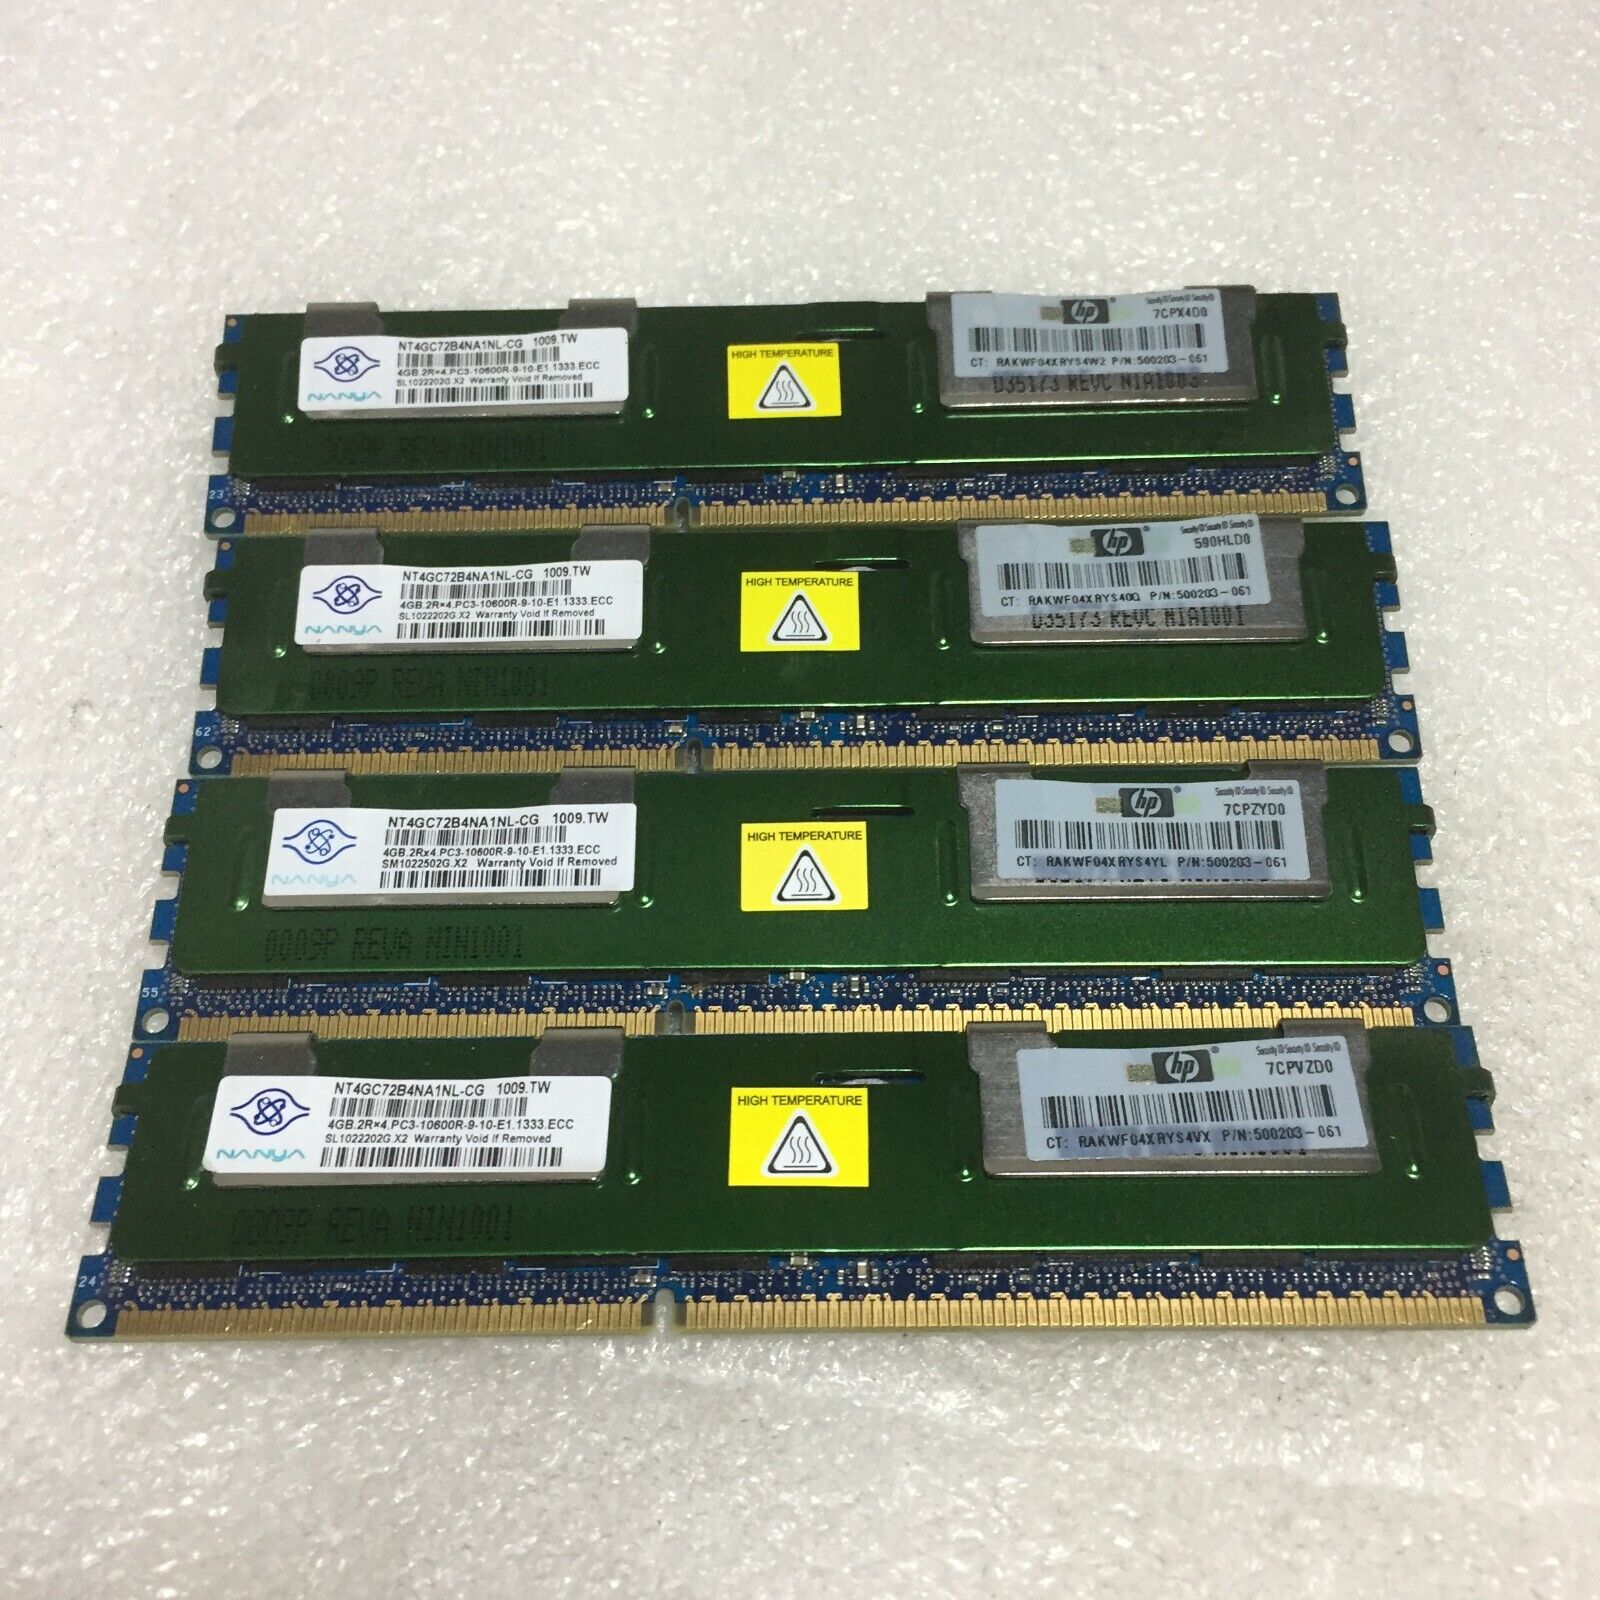 Nanya 16GB RAM kit (4x4GB) PC3-10600R REG ECC Memory NT4GC72B4NA1NL-CG FREE S/H